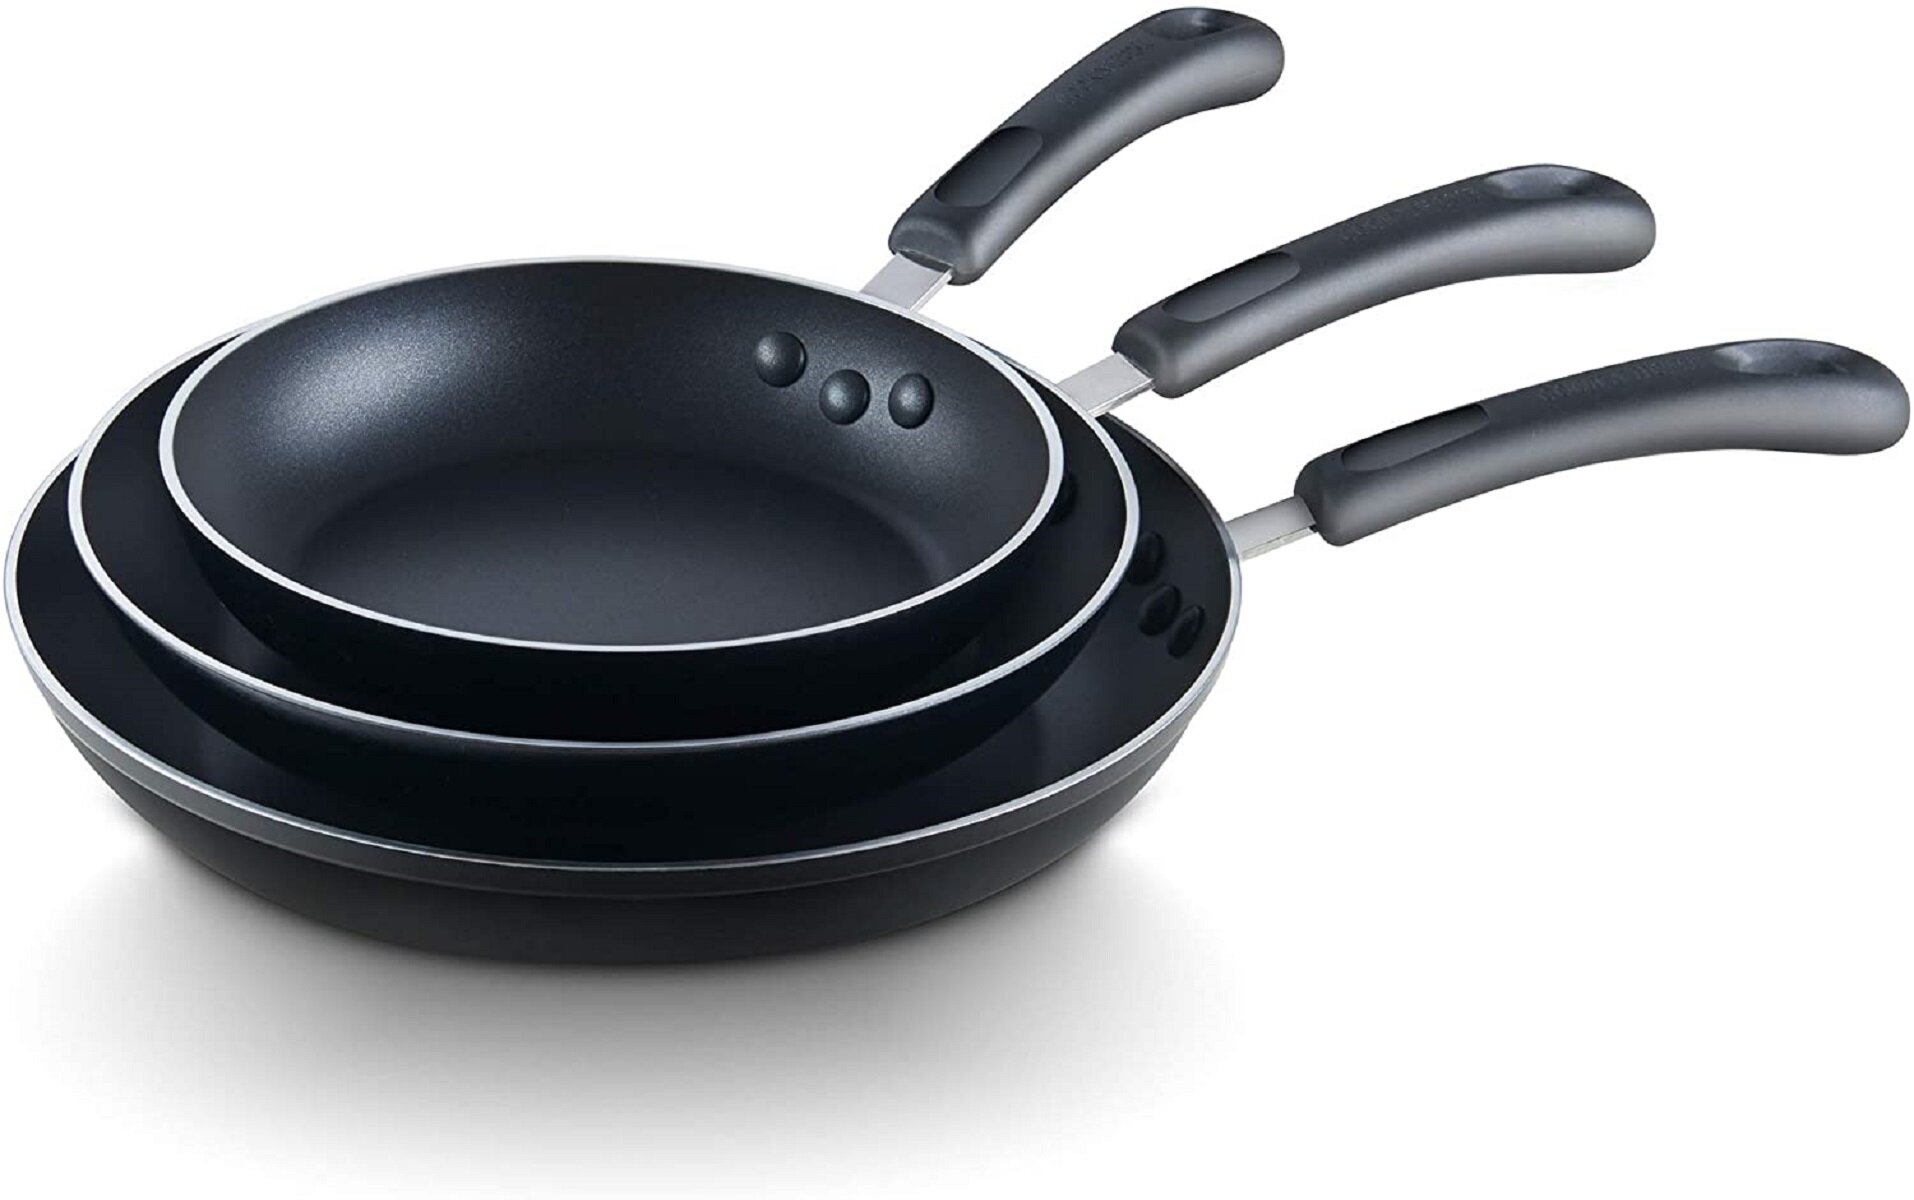  Farberware Restaurant Pro Nonstick Frying Pan / Fry Pan /  Skillet - 8 Inch, Silver : Home & Kitchen